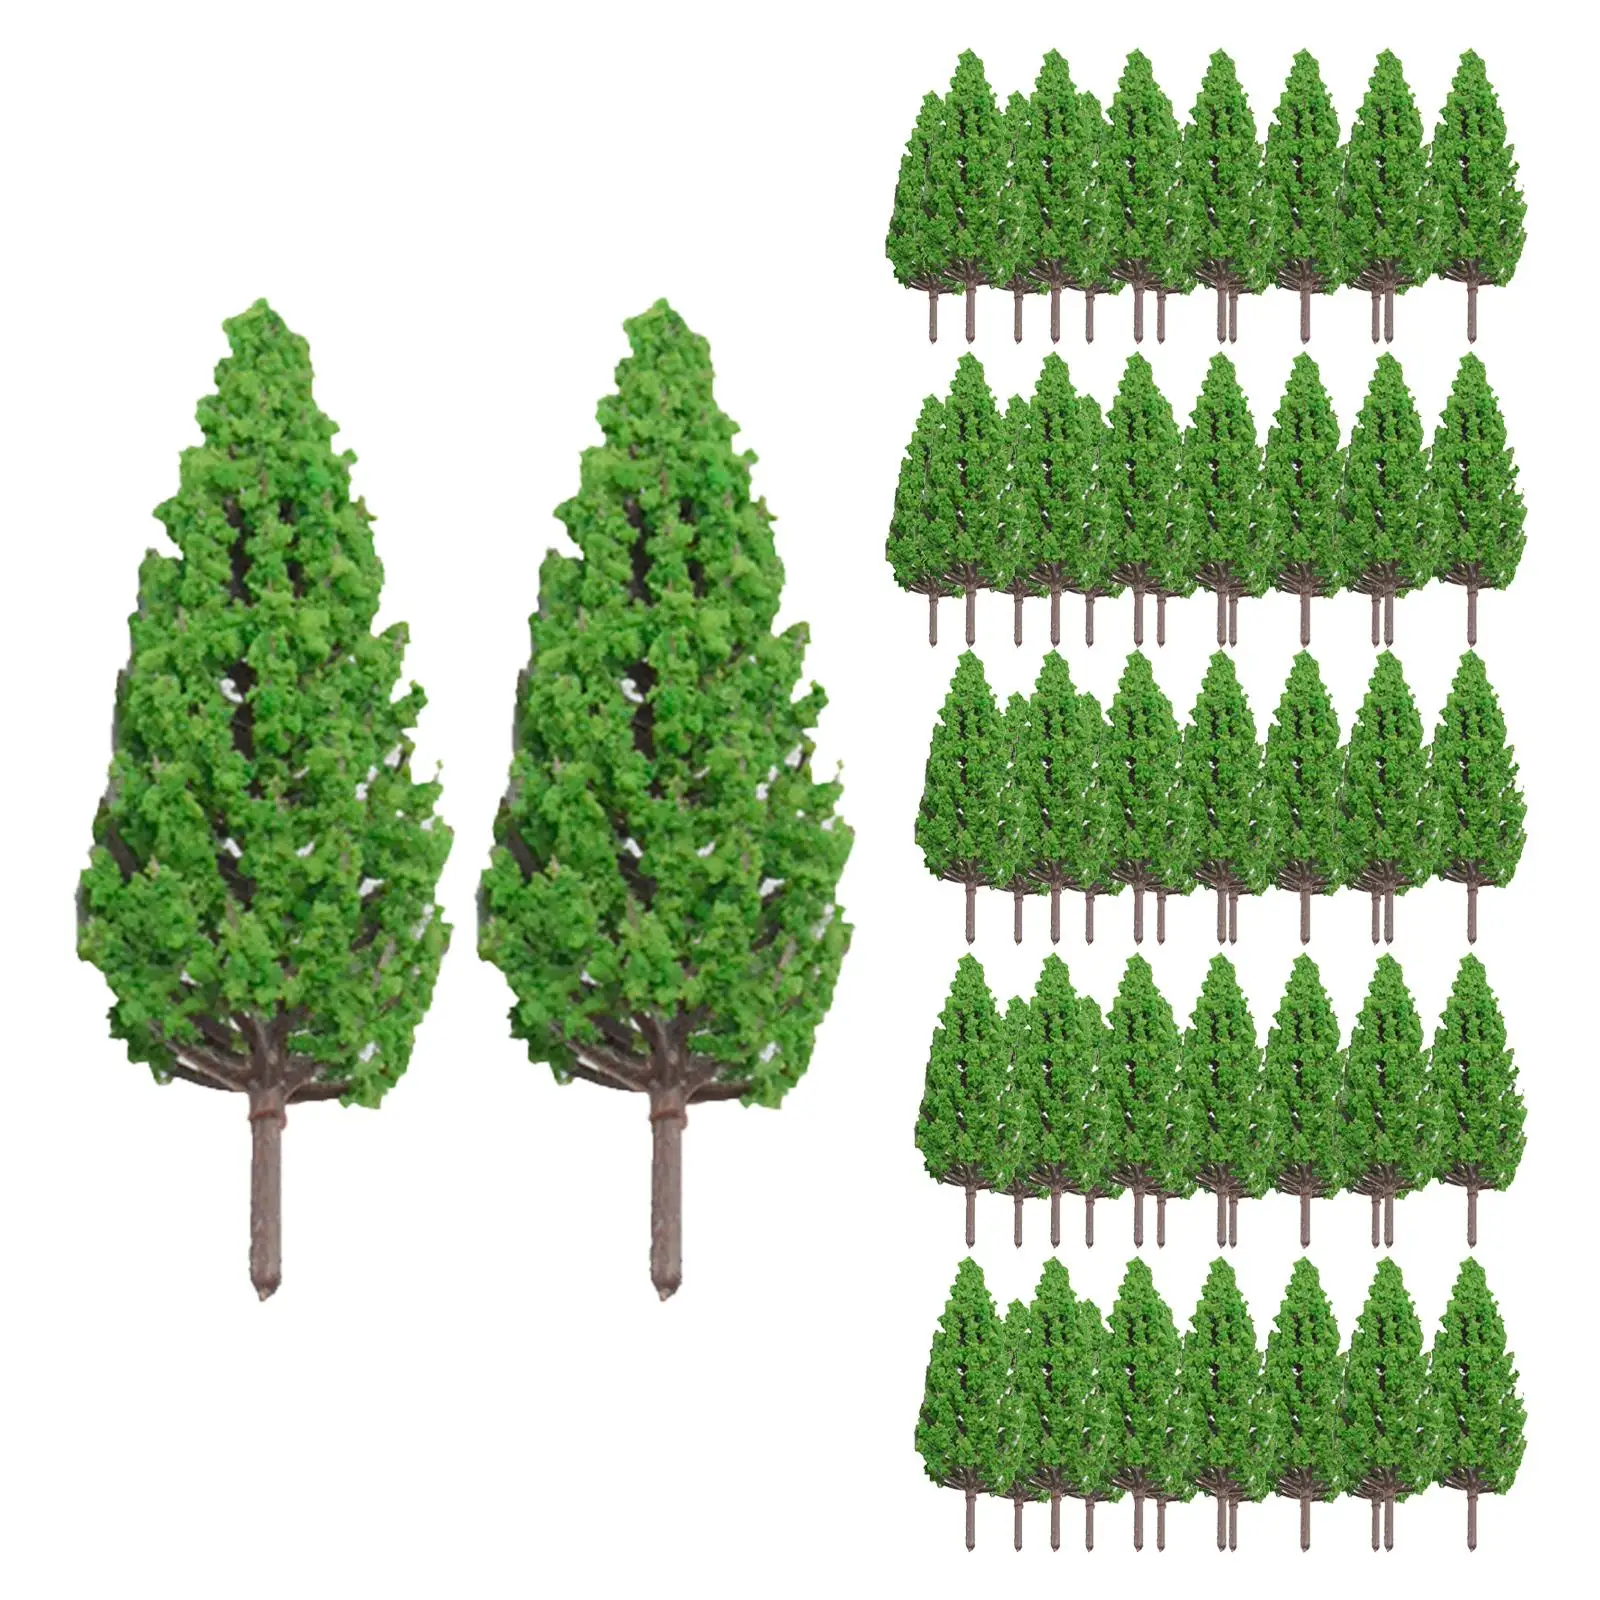 70Pcs Railroad Green Scenery Tree Miniature Tree for Landscape Layout Railway Miniature Scenery DIY Crafts Building Model